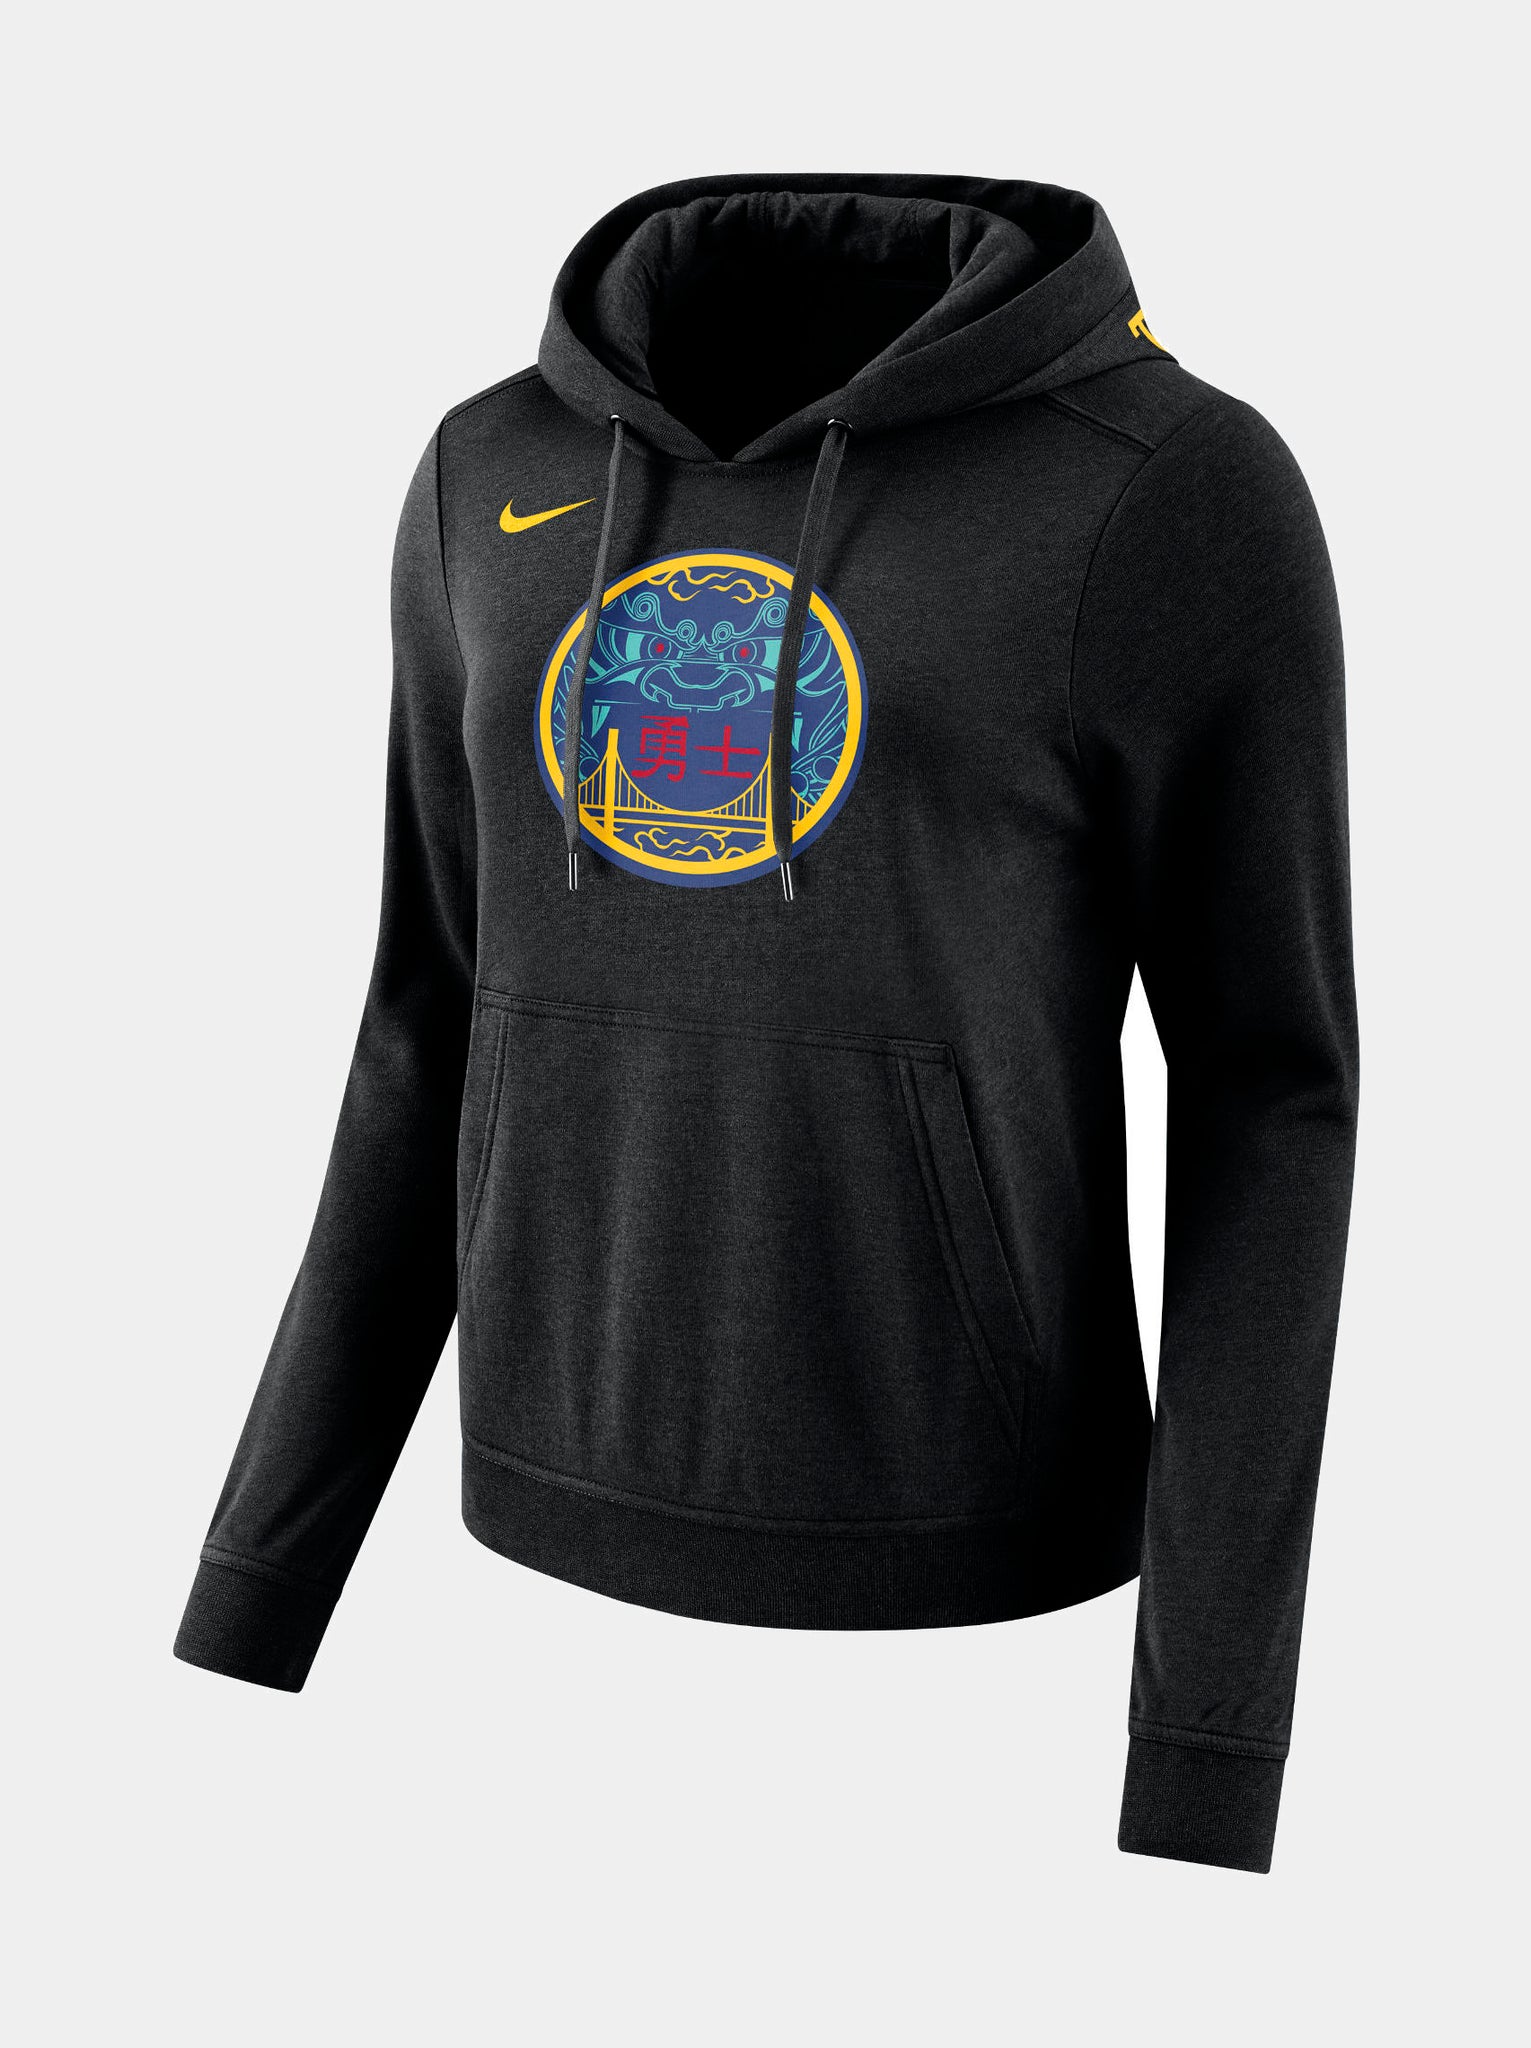 Golden State Warriors Nike City Edition Essential Fleece Hoodie